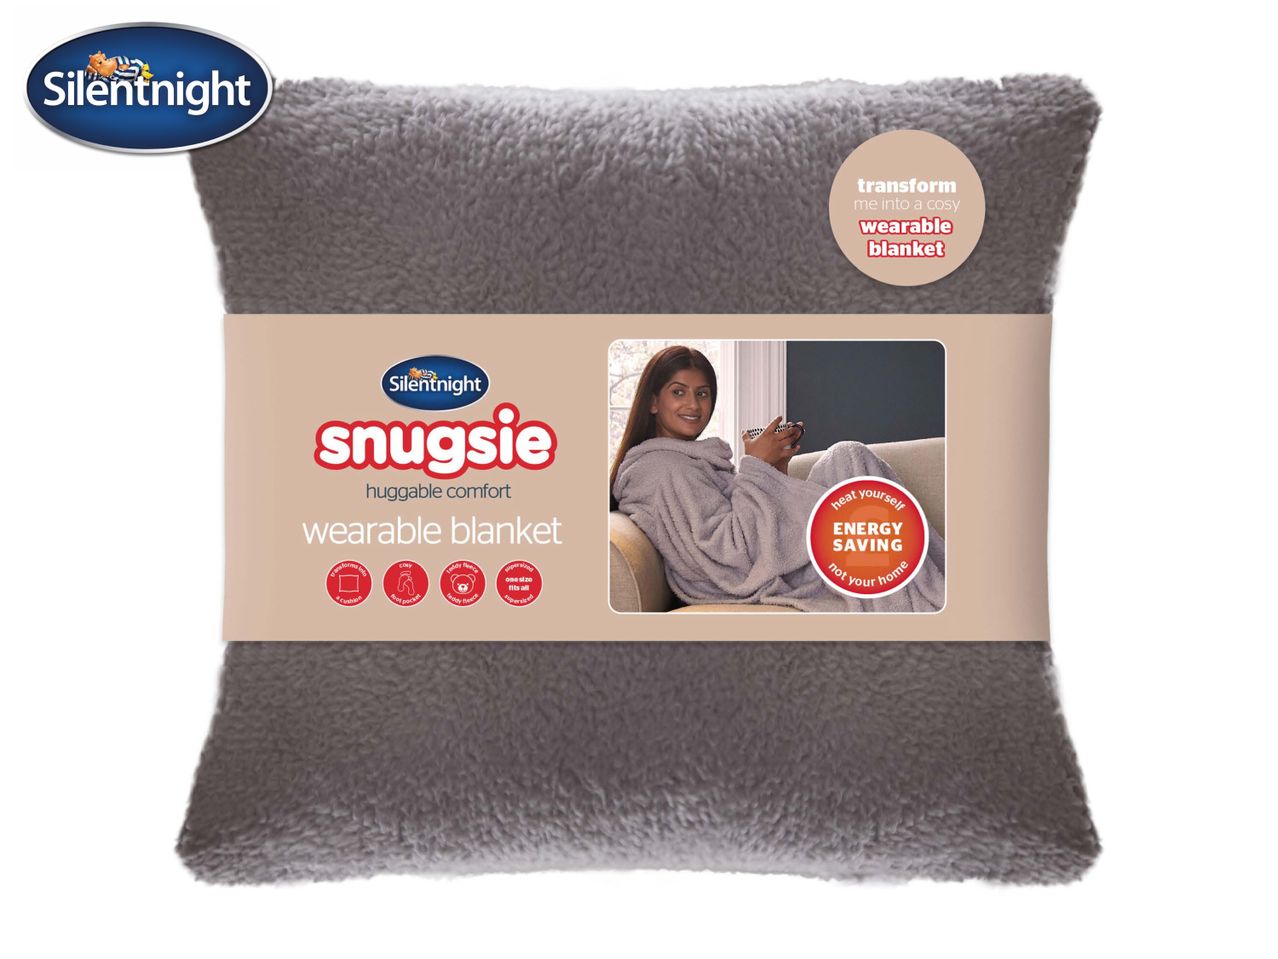 Go to full screen view: Silentnight Snugsie Wearable Blanket - Image 1